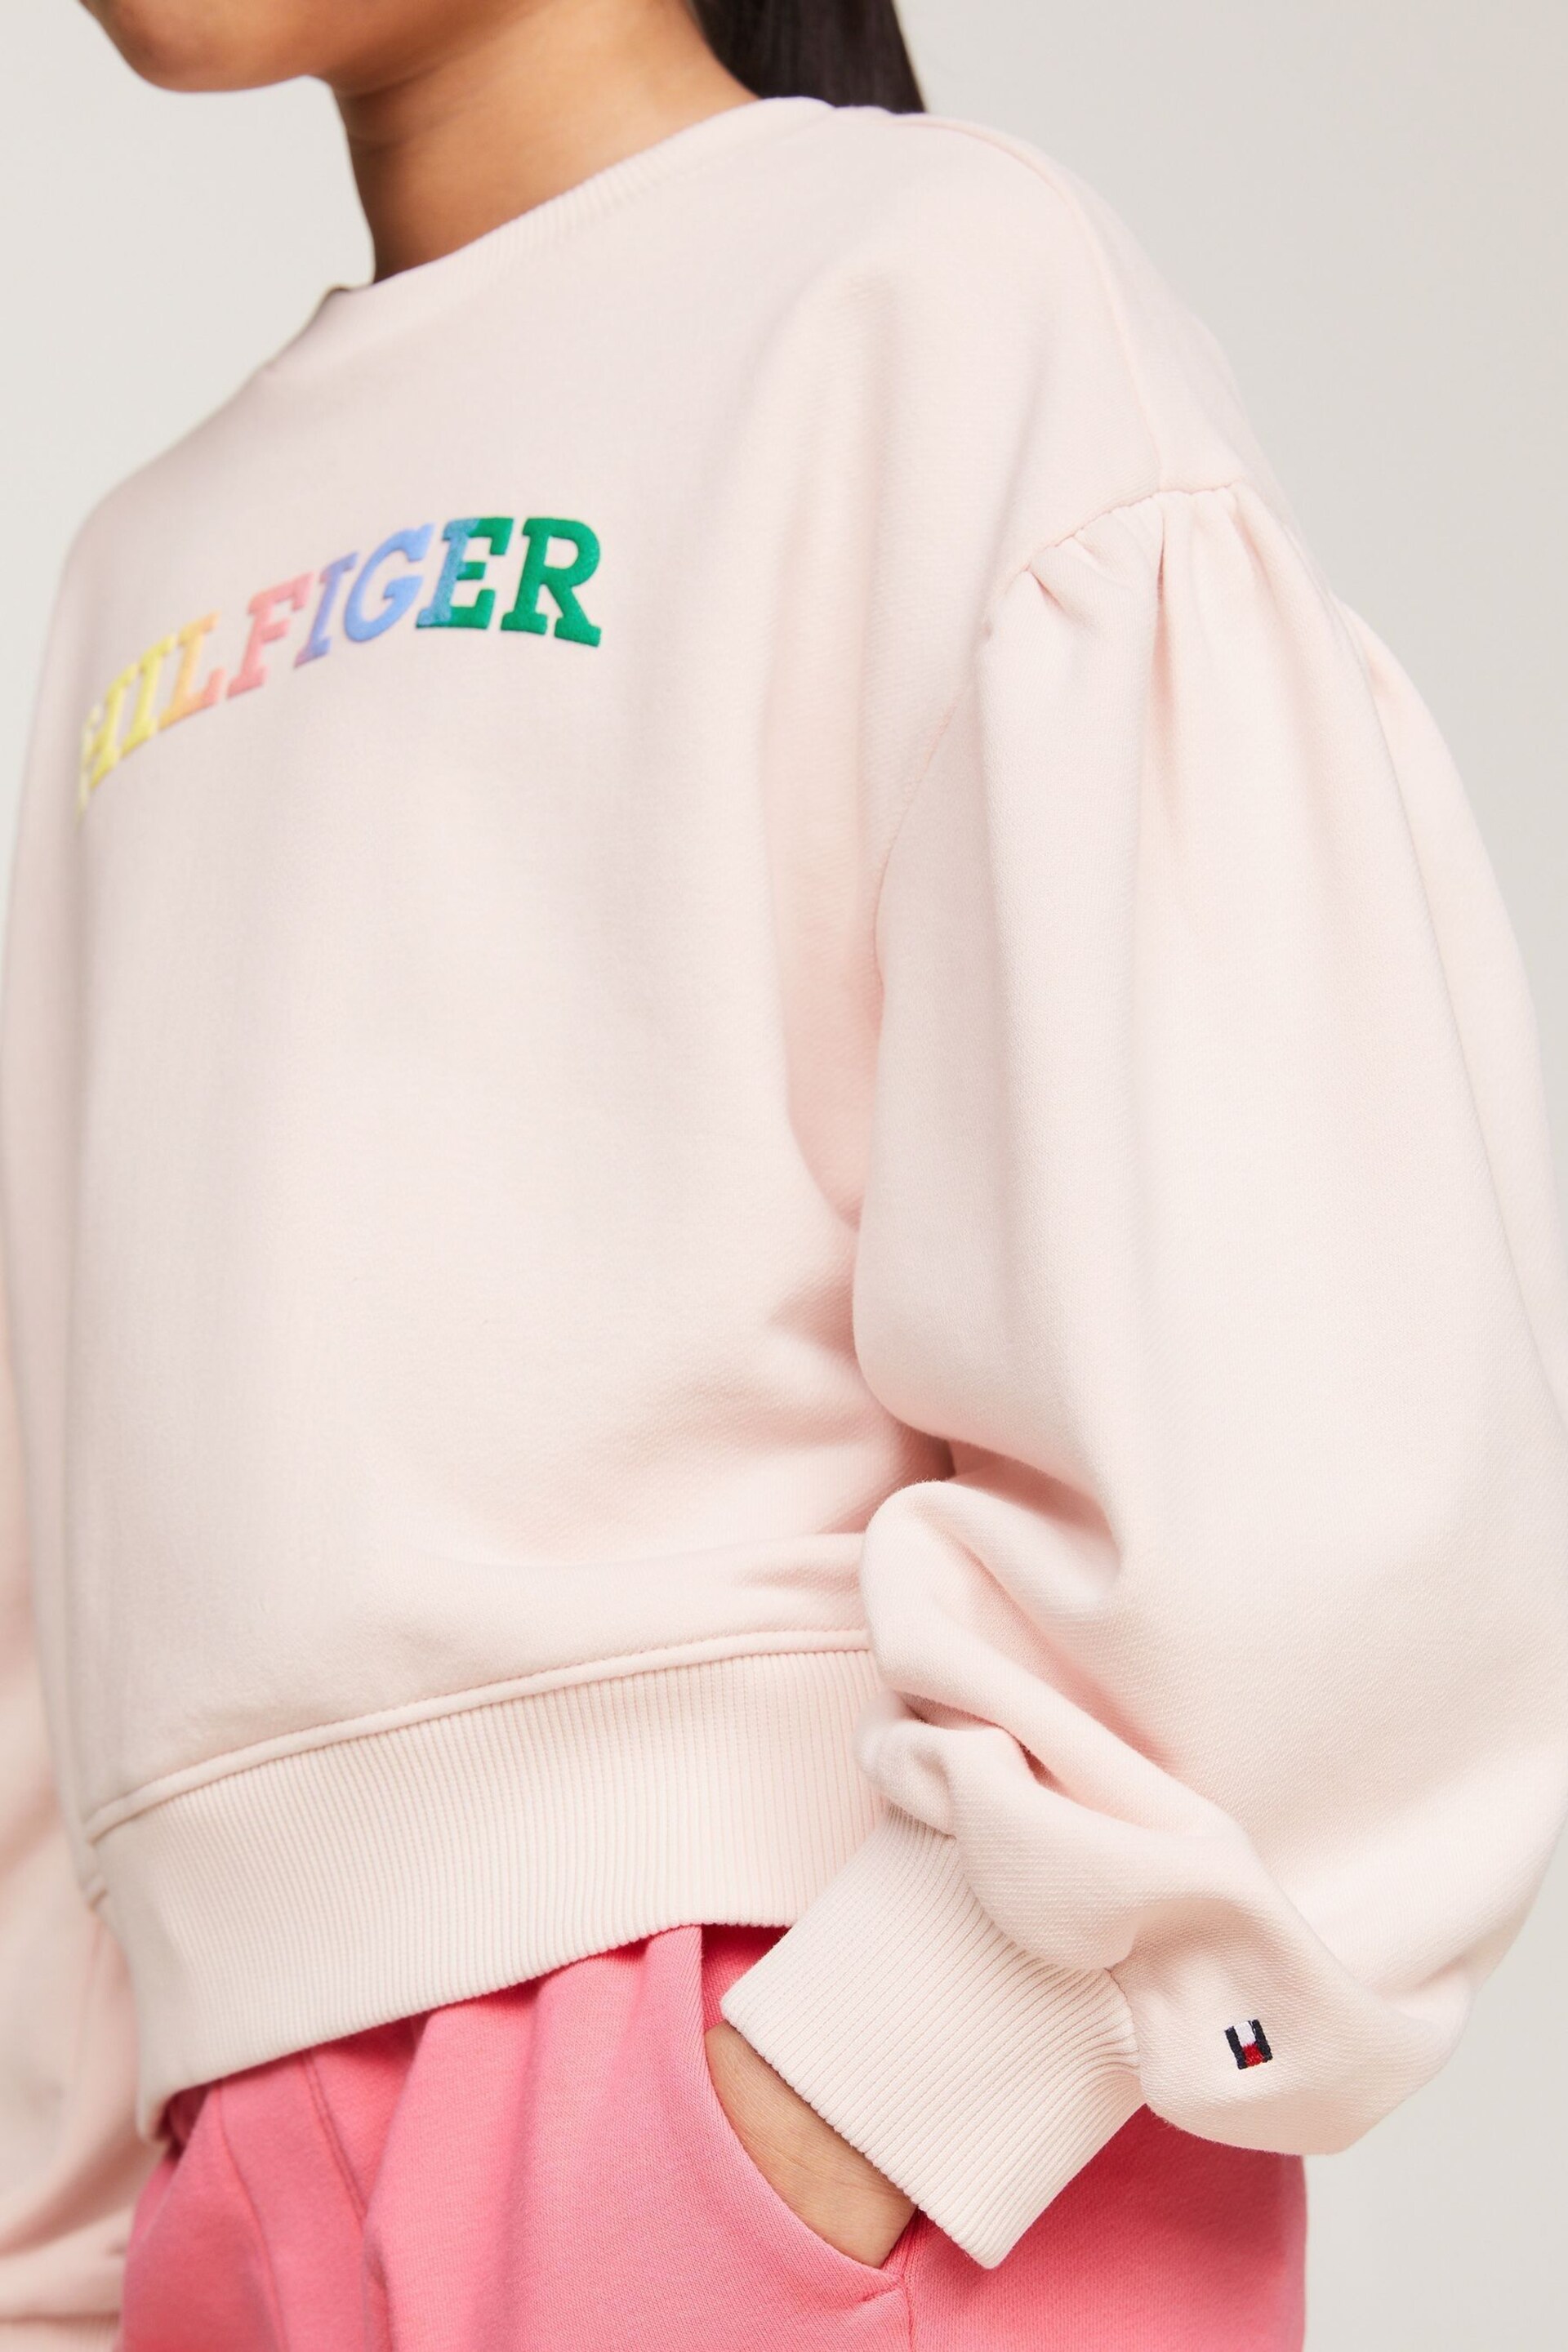 Tommy Hilfiger Pink Monotype Sweatshirt - Image 3 of 6